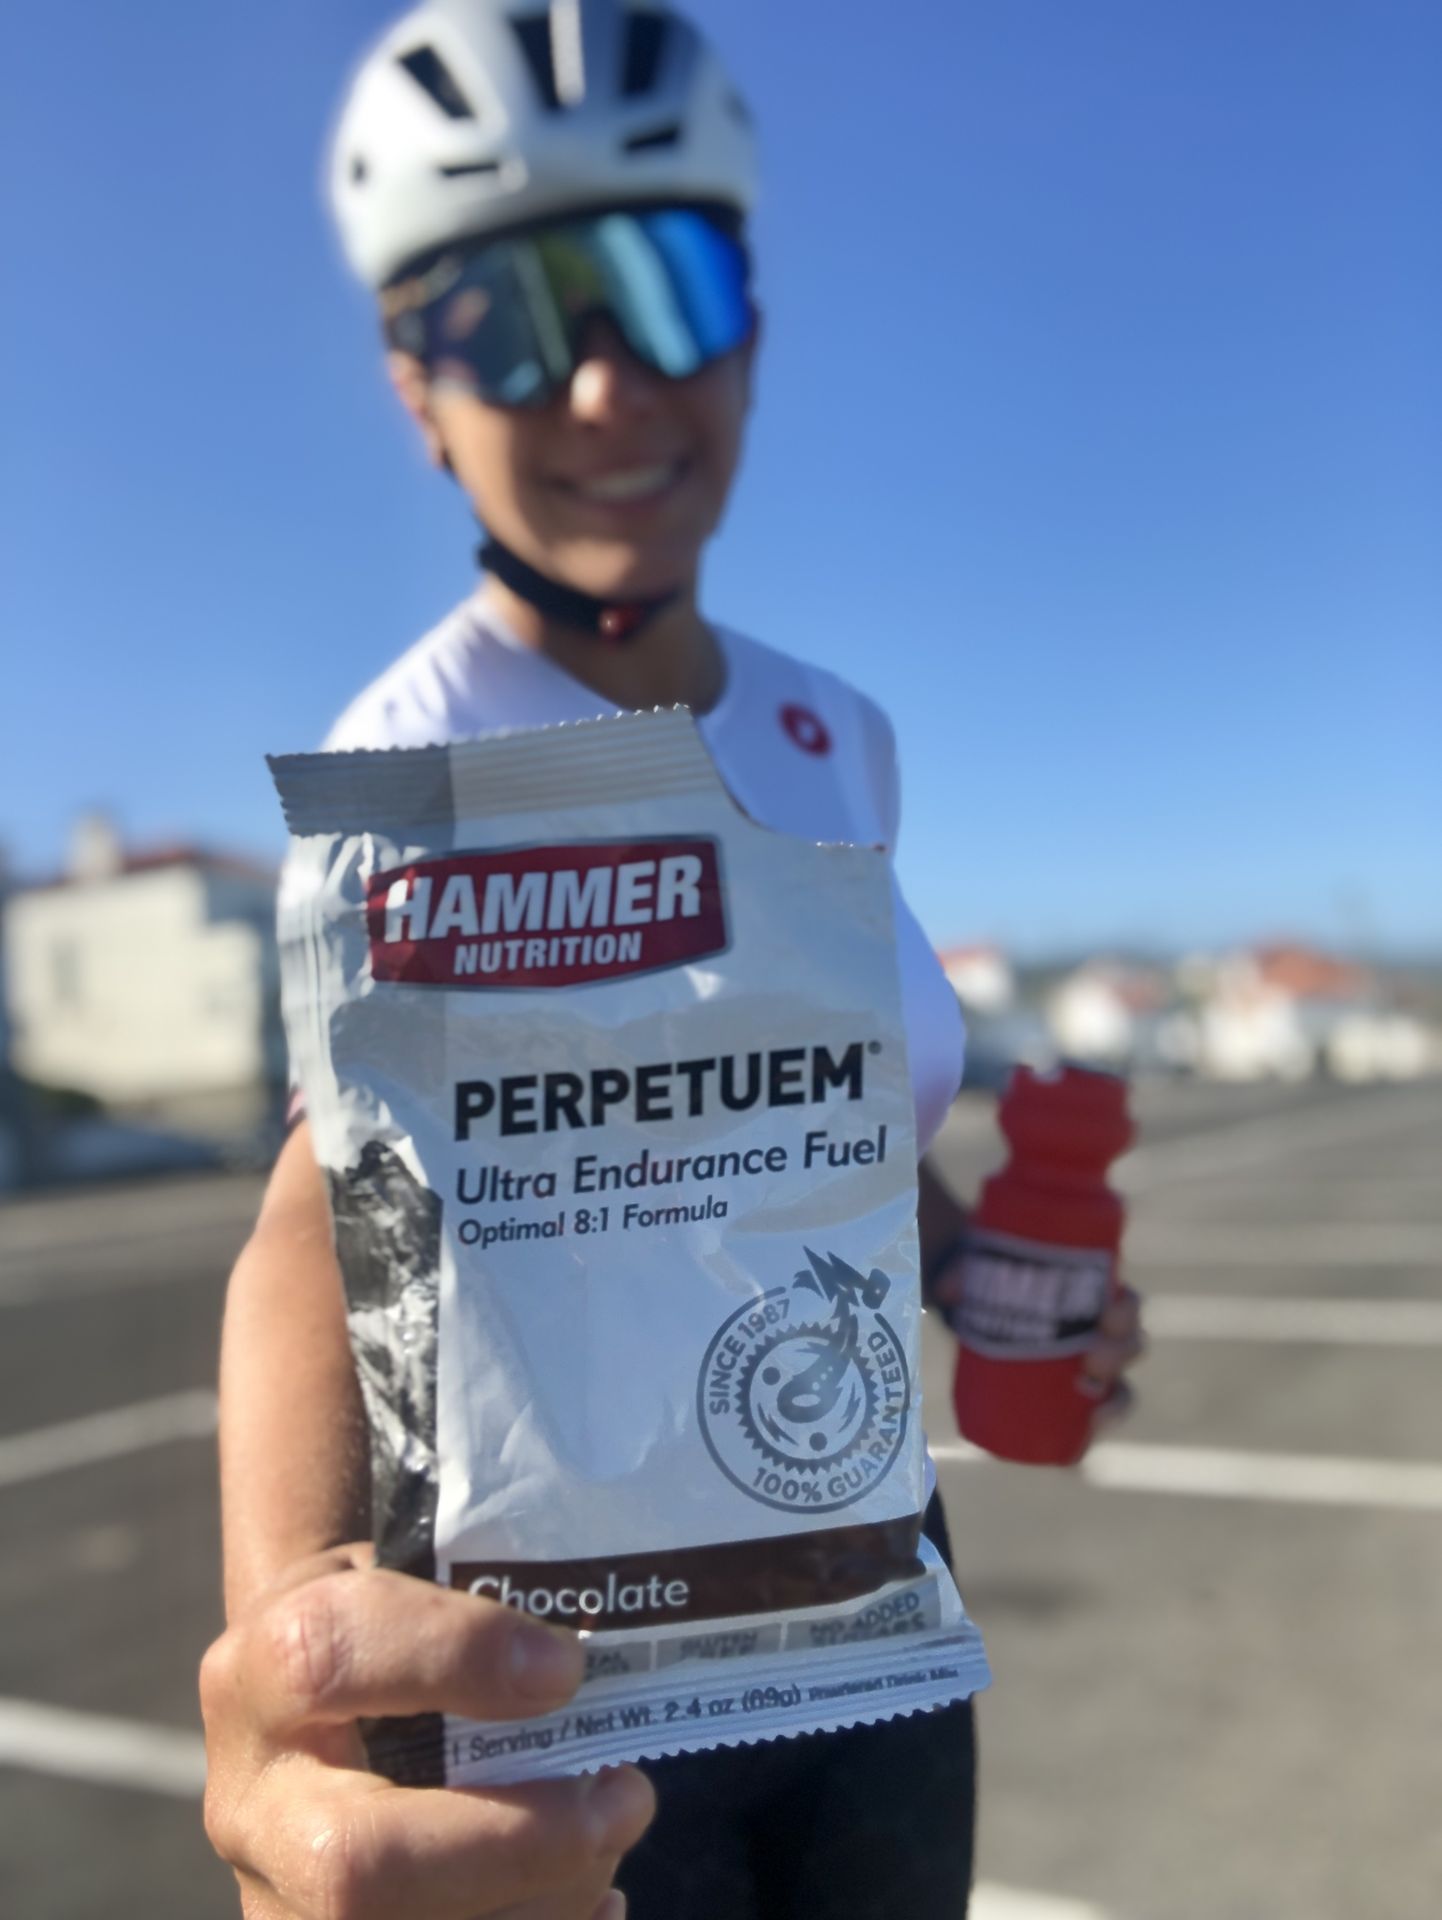 Perpetuem - Hammer Sponsored Athlete